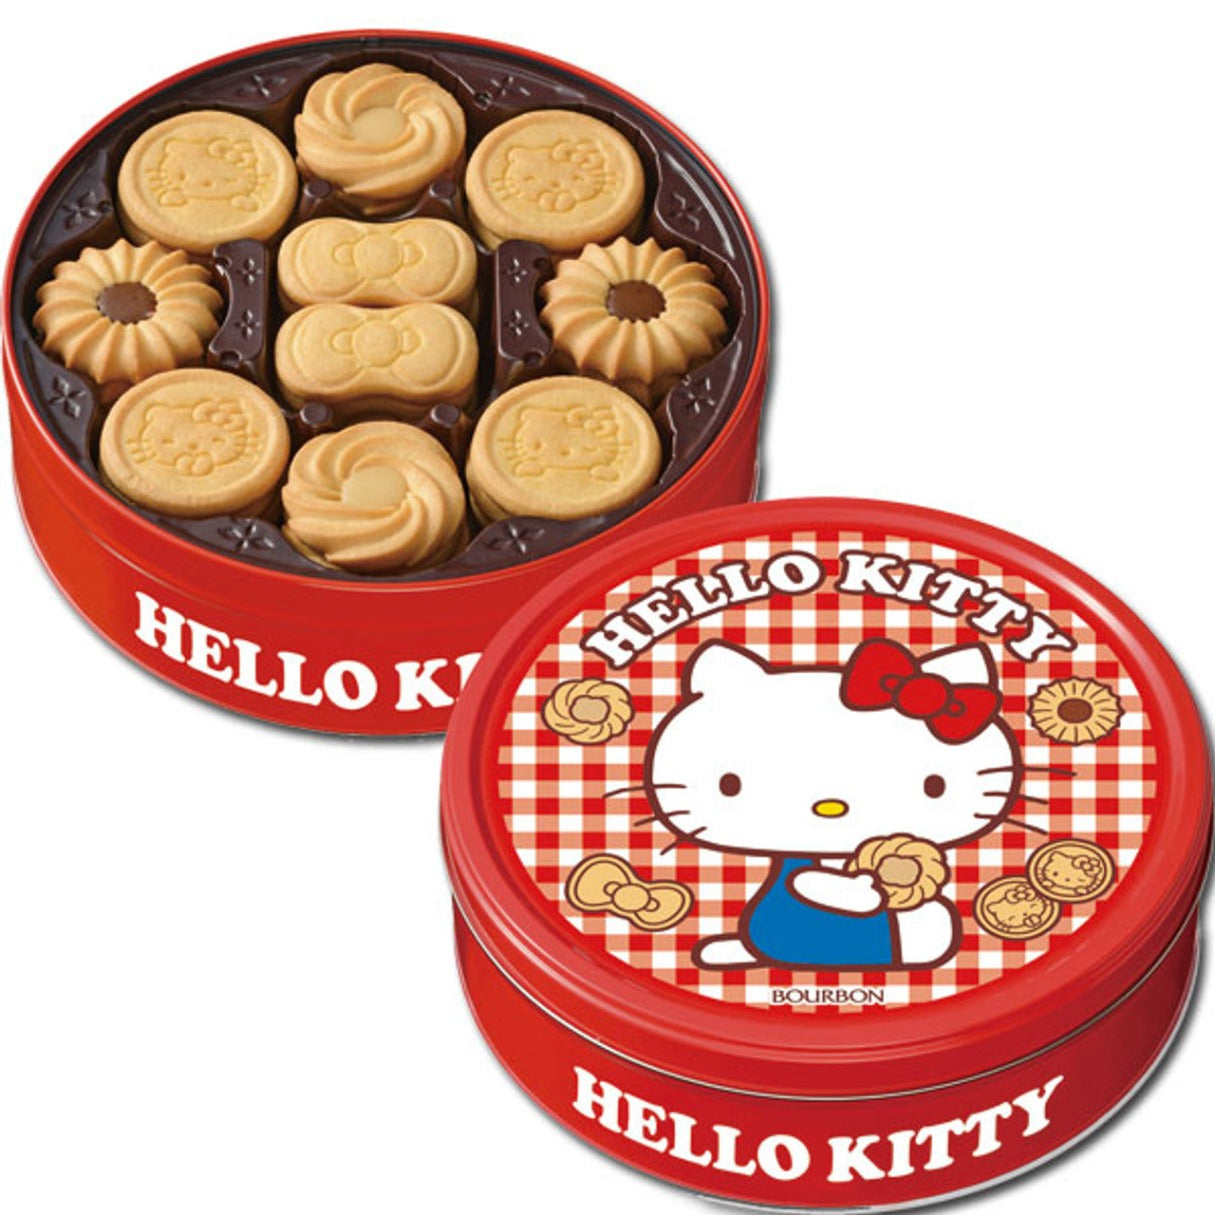 Hello Kitty Assorted Cookie Tin  11.5oz  -  4ct